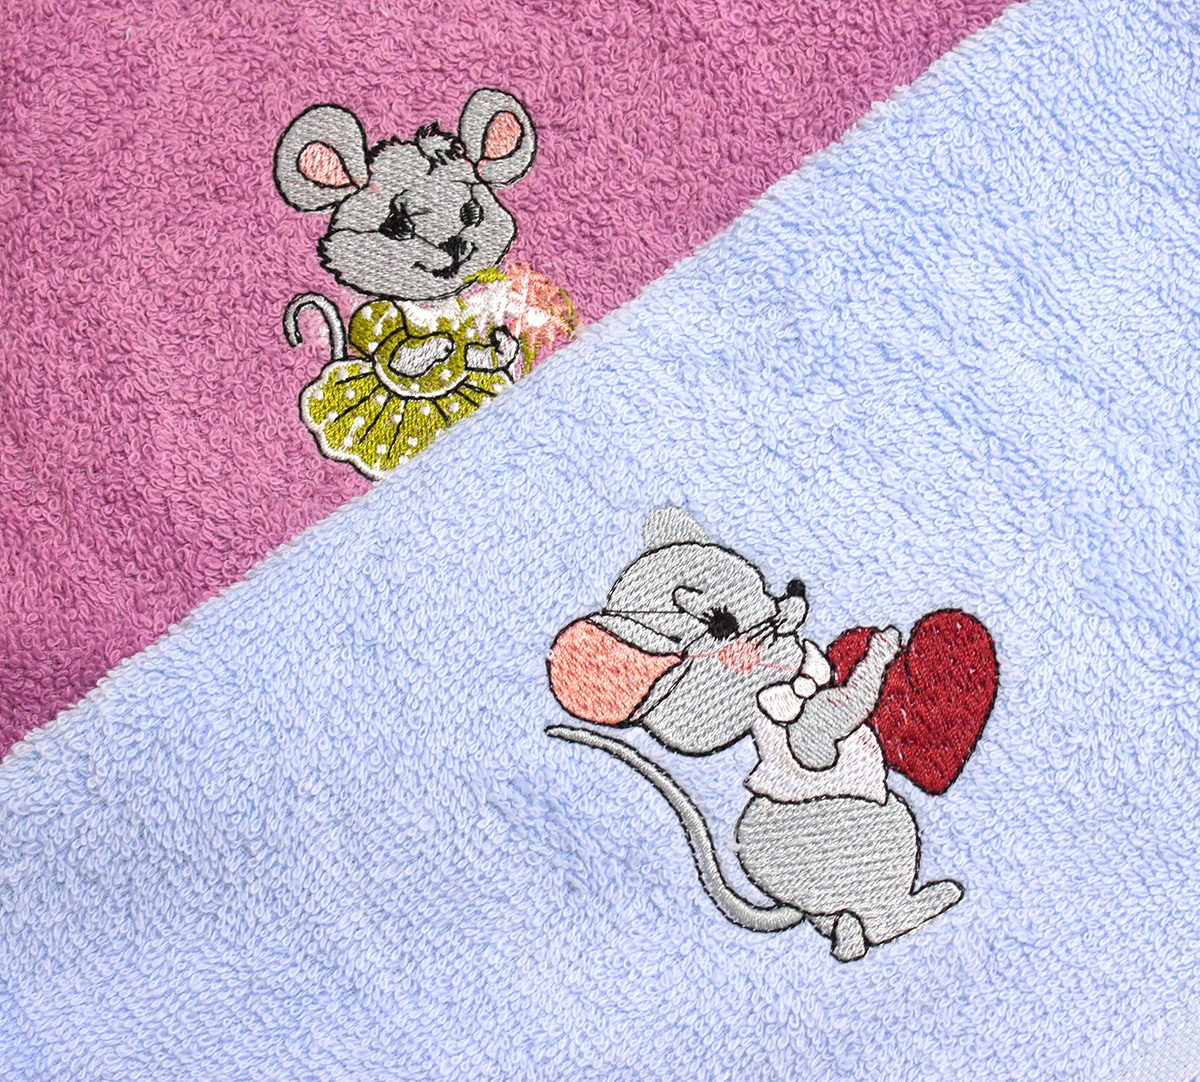 Детские картинки полотенца. Полотенце рисунок. Махровые полотенца с рисунком. Вышивка на махровом полотенце. Детское полотенце с вышивкой.